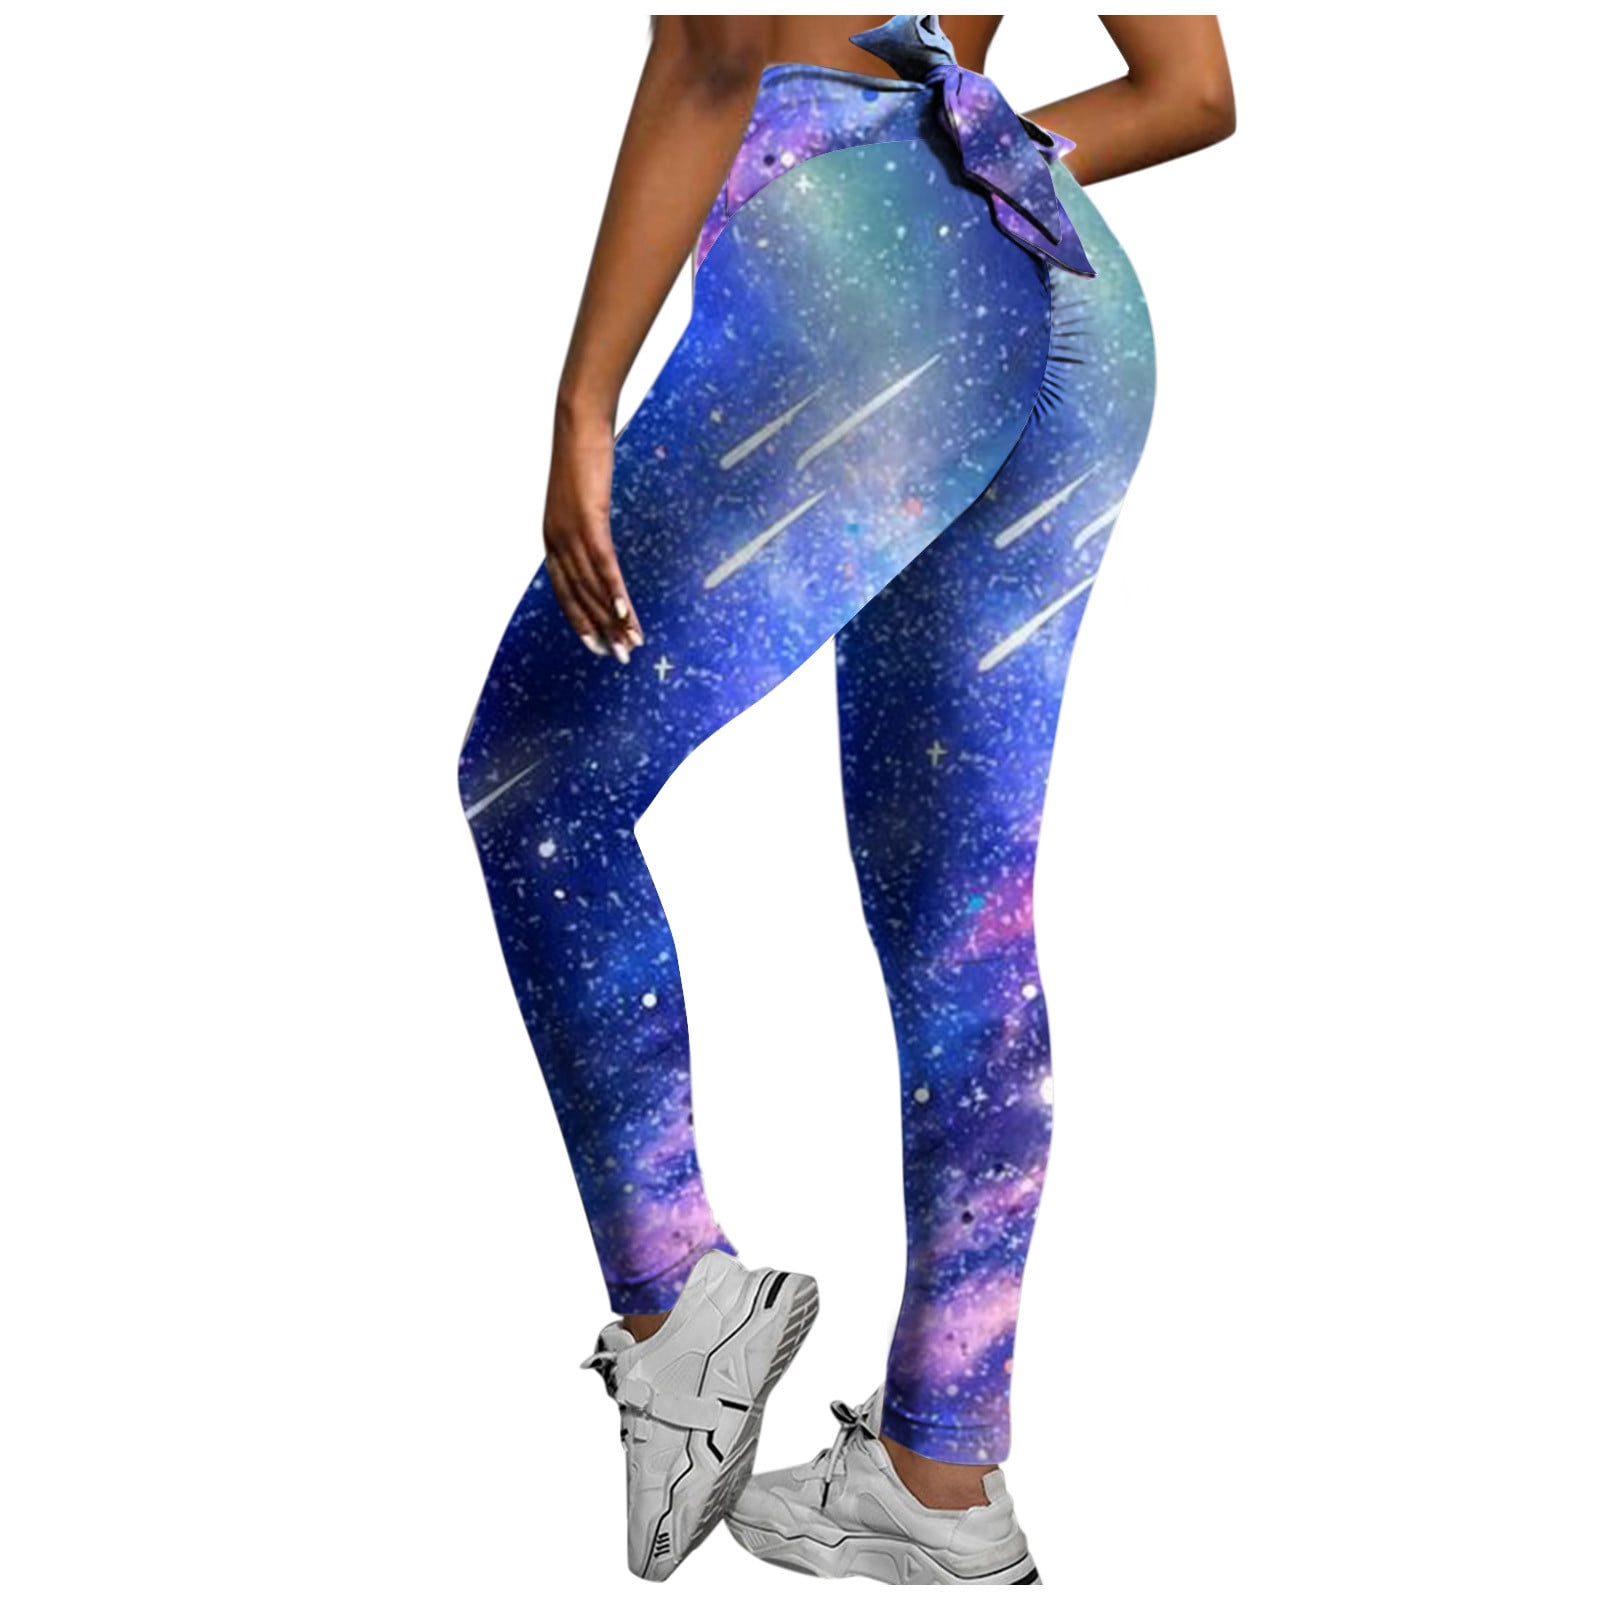 Free Leaper Women's High Waisted Printed Yoga Pants 7/8 Length